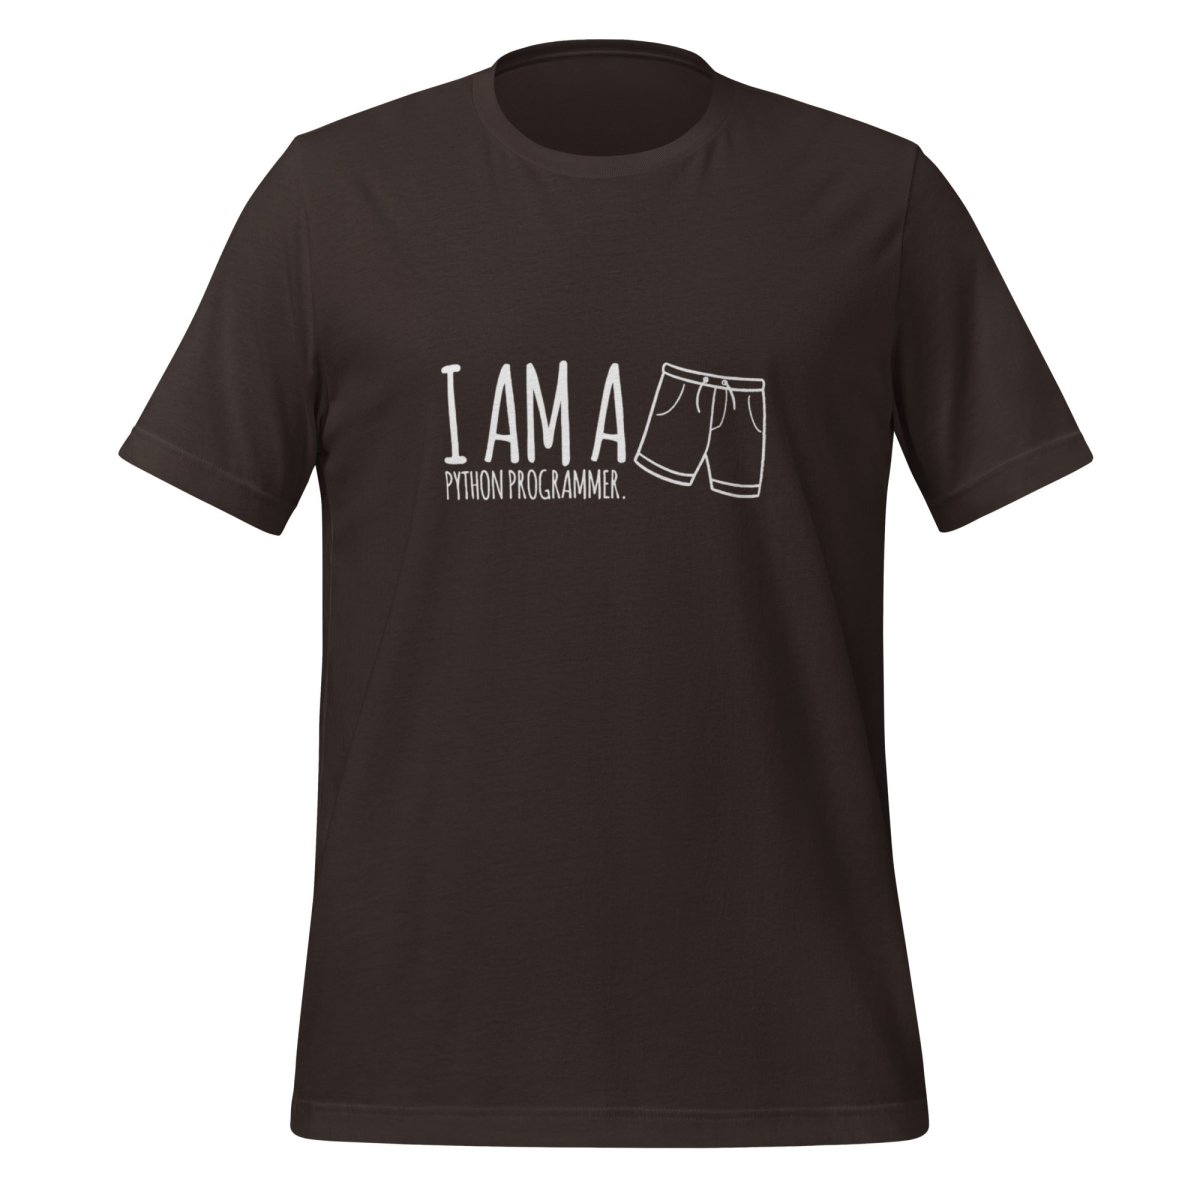 I'm a Python programmer. T - Shirt (unisex) - Brown - AI Store